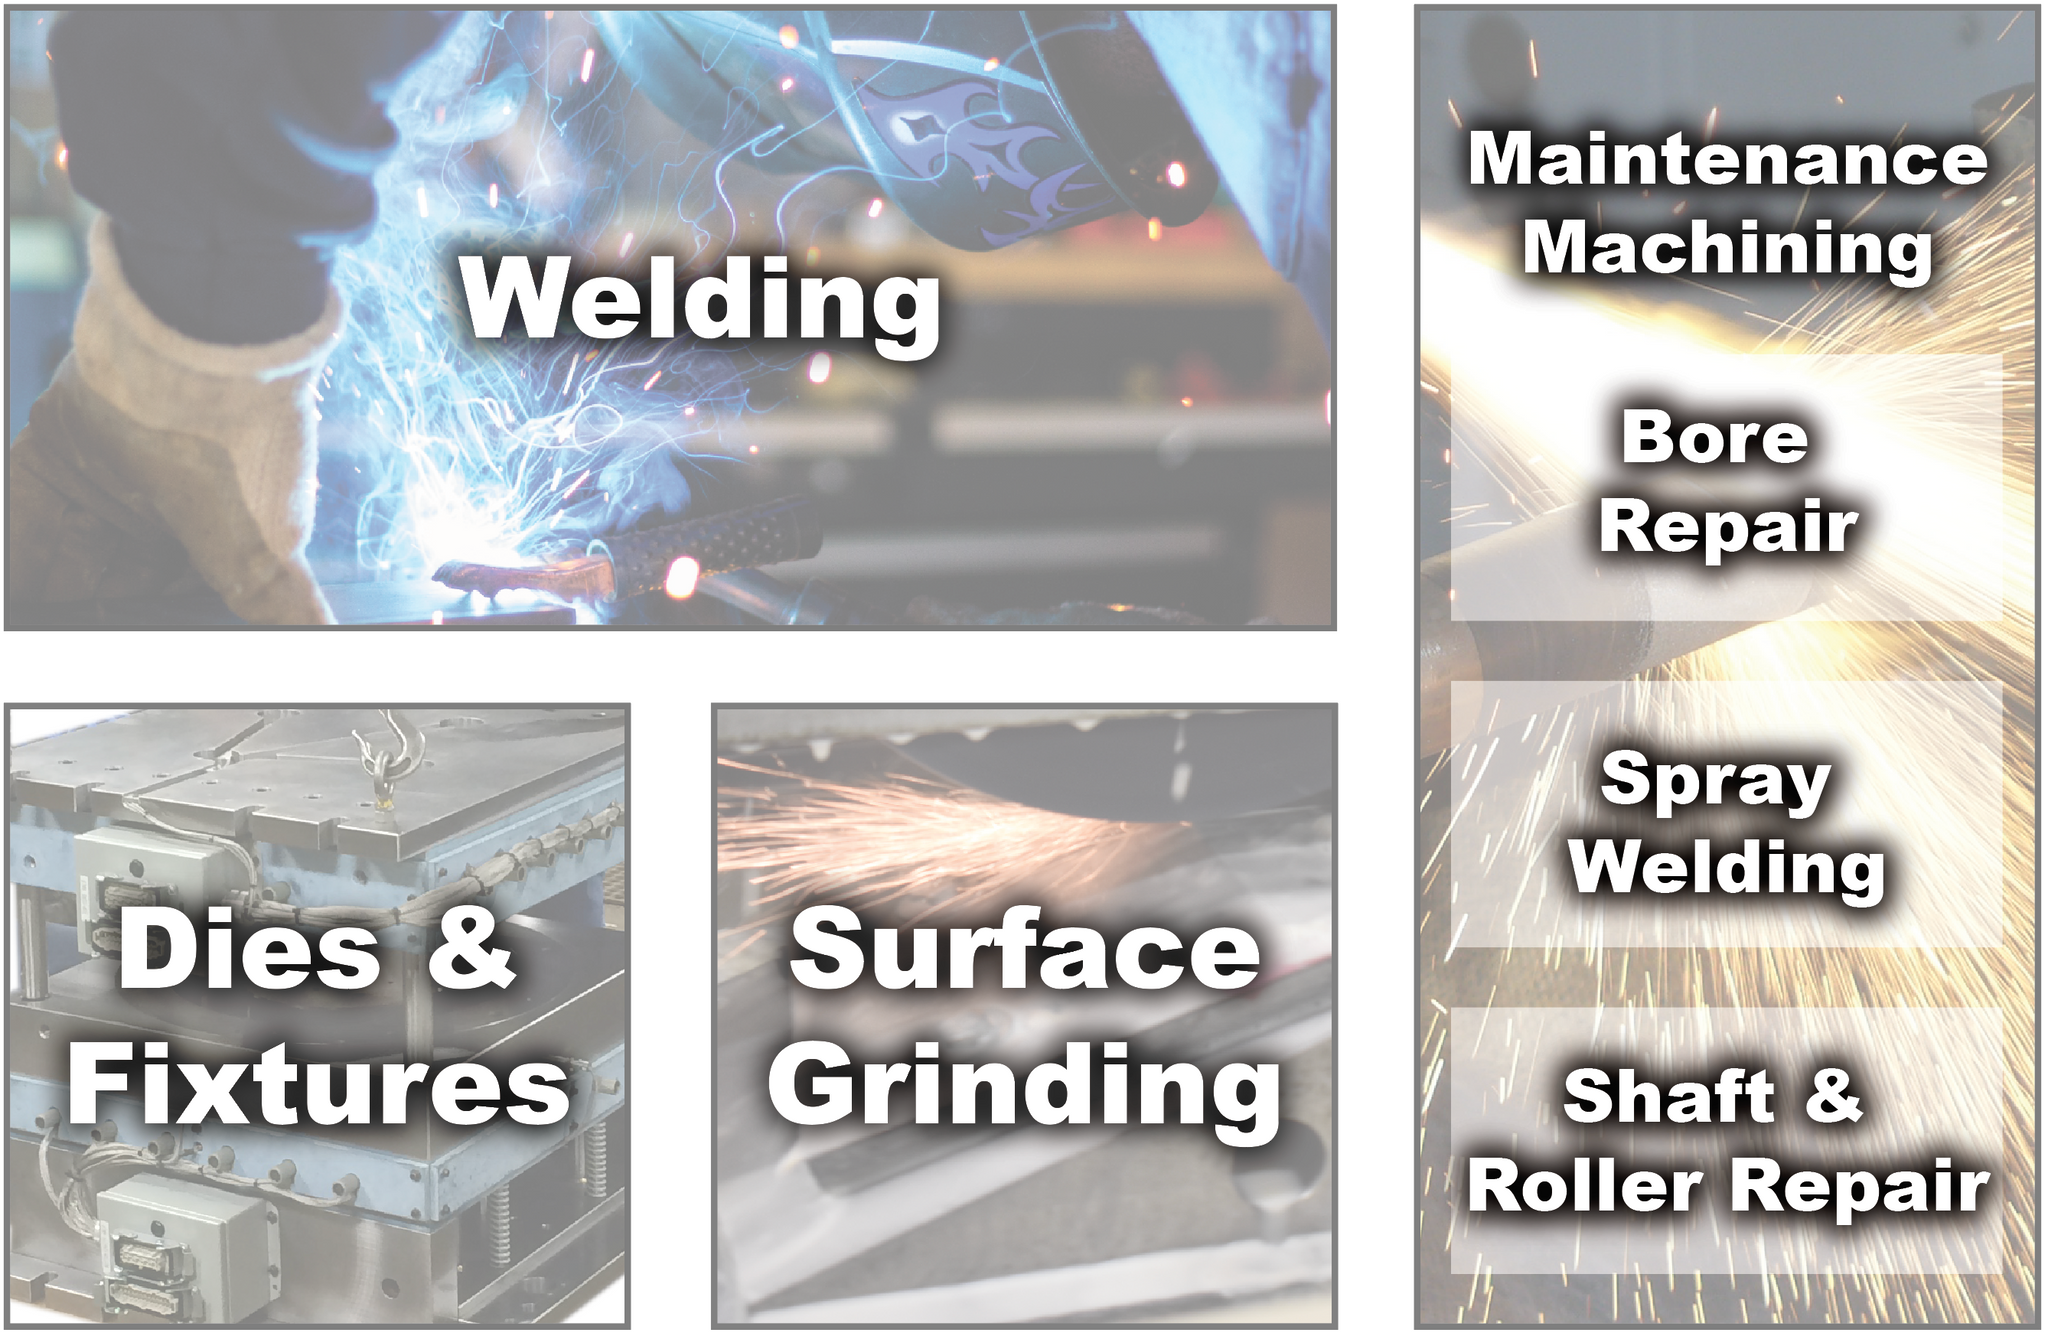 CNC Machine Shop, Design Services, Reverse Engineer, Welding, Dies, Fixtures, Surface Grinding, Maintenance Machining